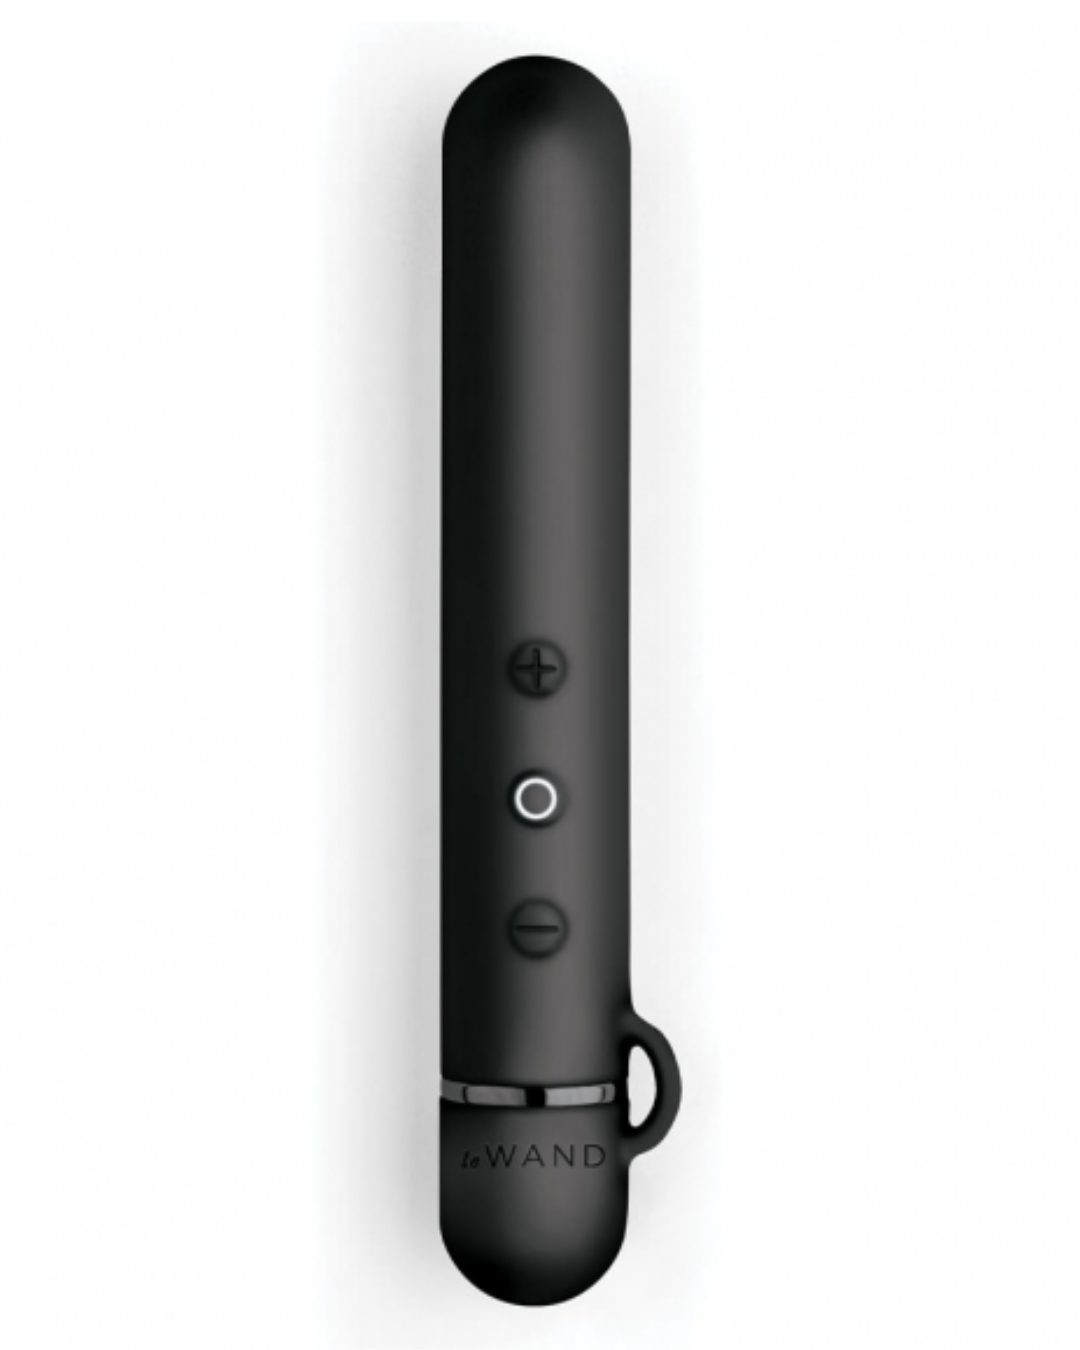 Le Wand Baton Slim Rechargeable Waterproof Vibrator - Black